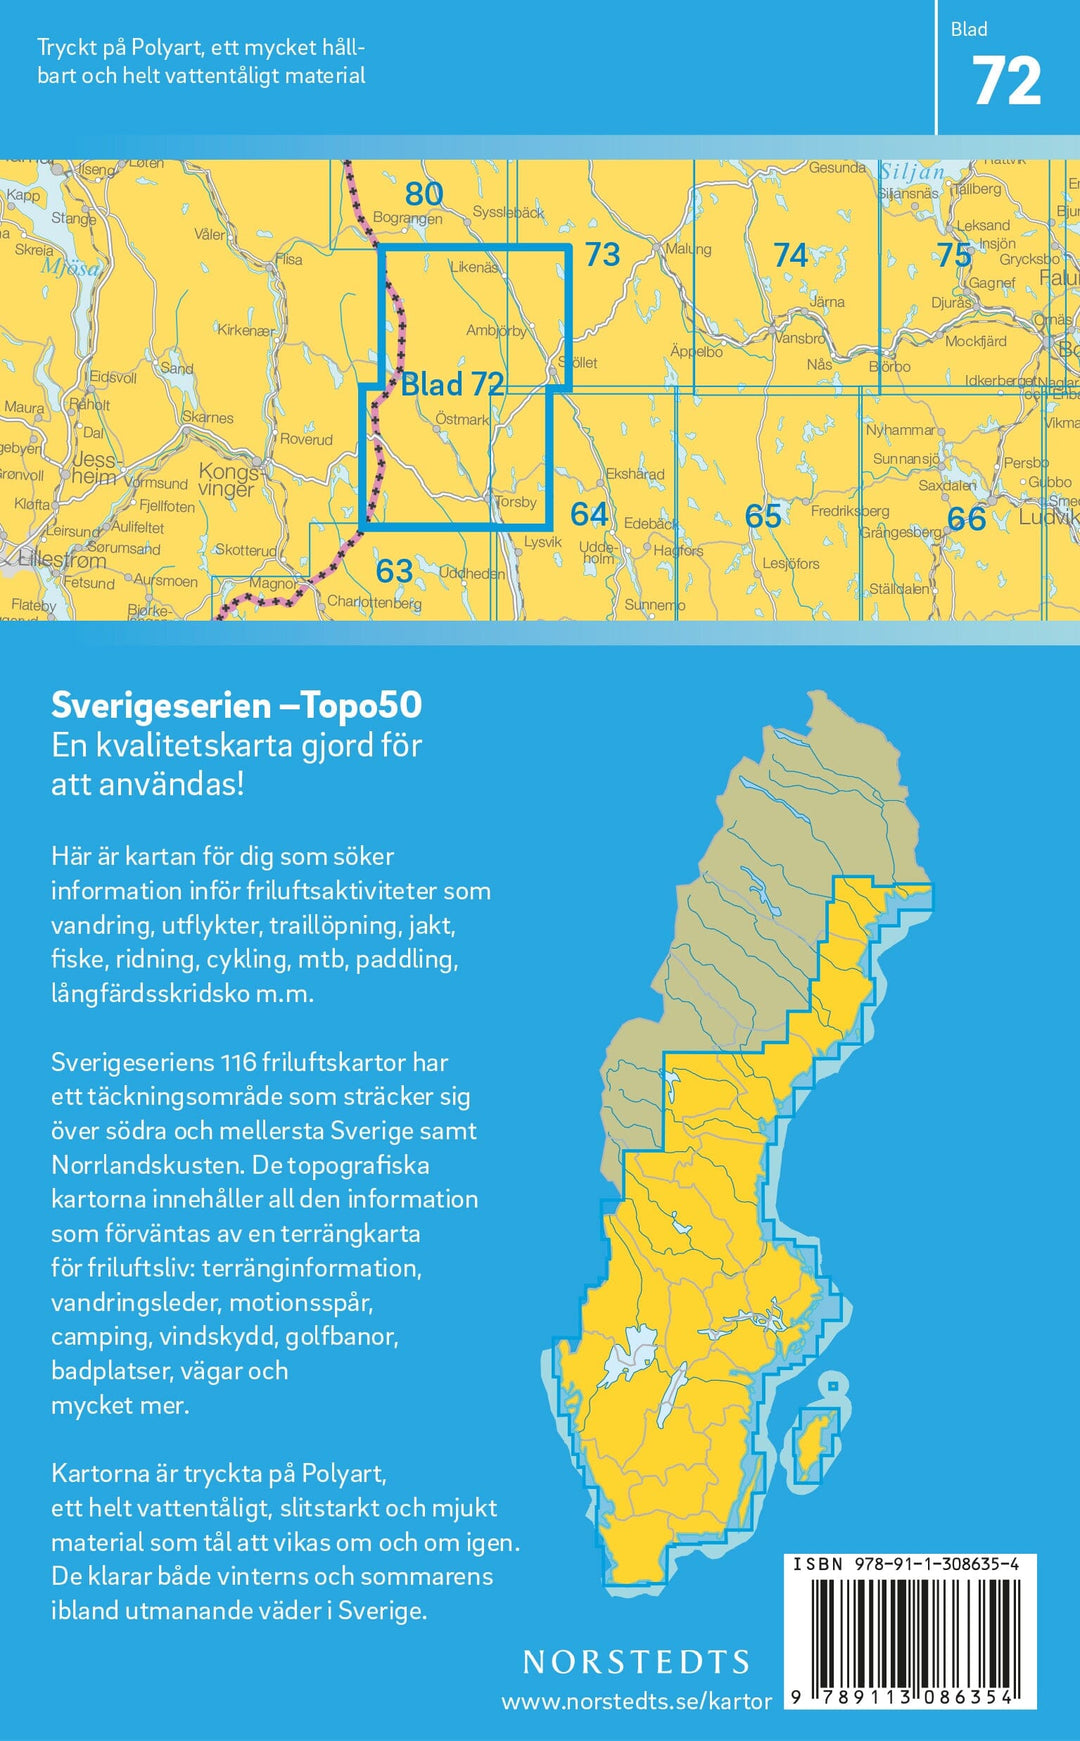 Carte topographique n° 72 - Torsby (Suède) | Norstedts - Sverigeserien carte pliée Norstedts 